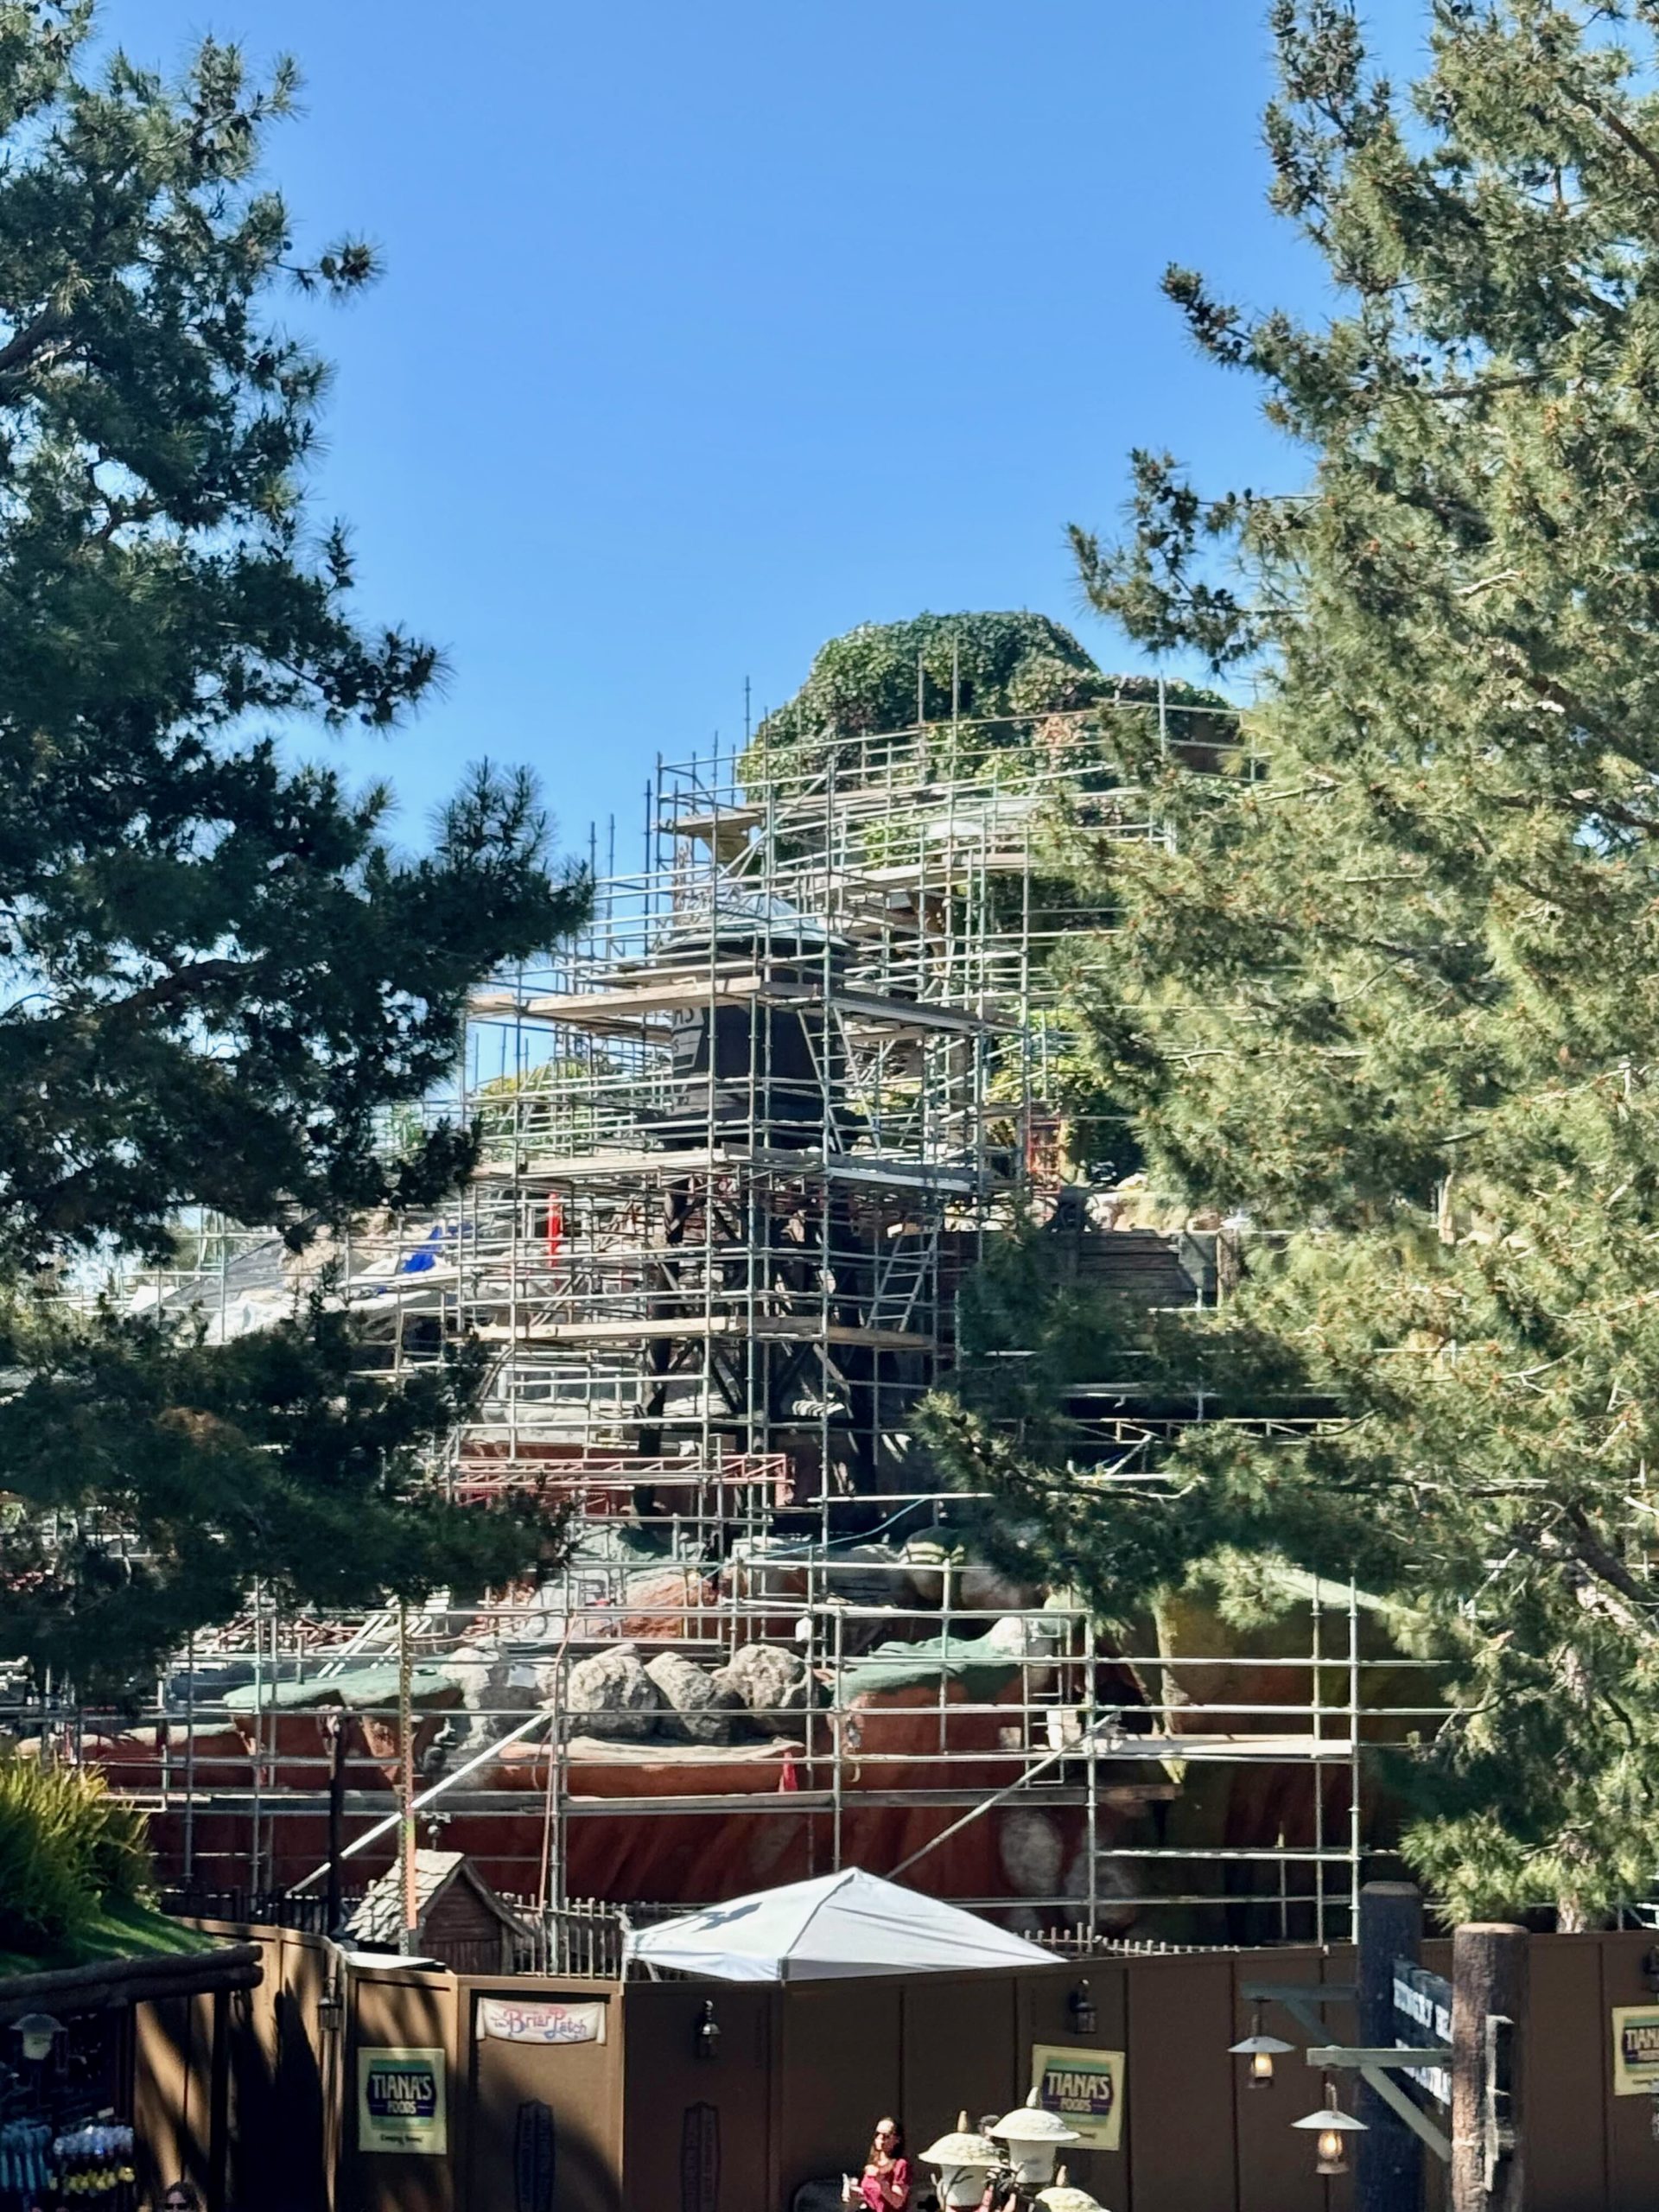 Tiana's Bayou Adventure Construction in Disneyland